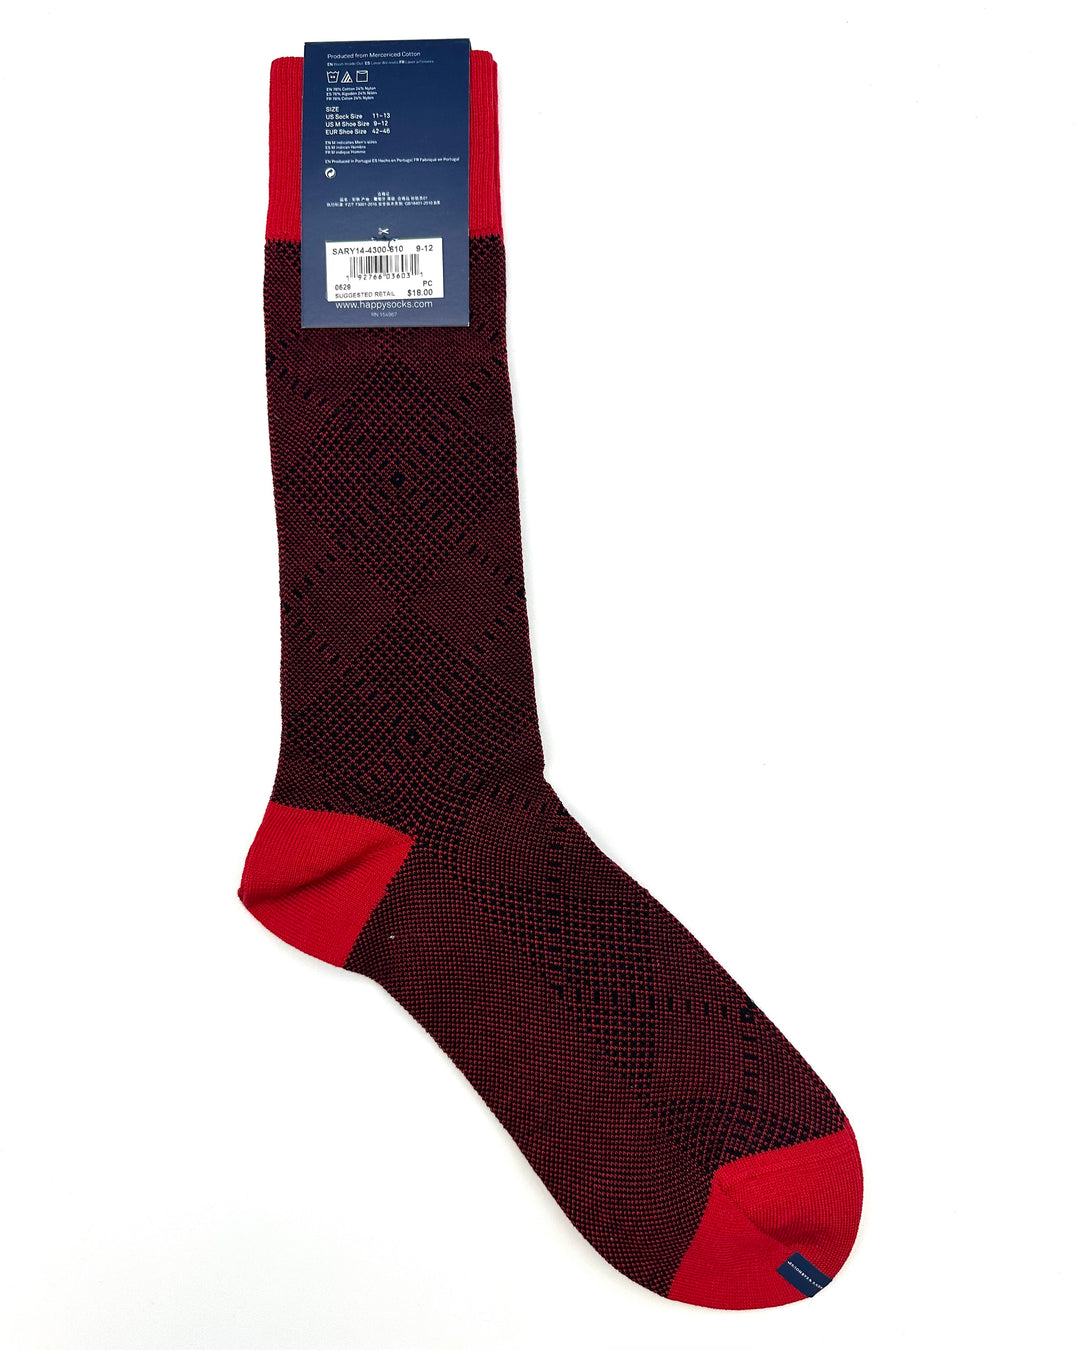 Maroon Diamonds Socks - Mens Size 9-12